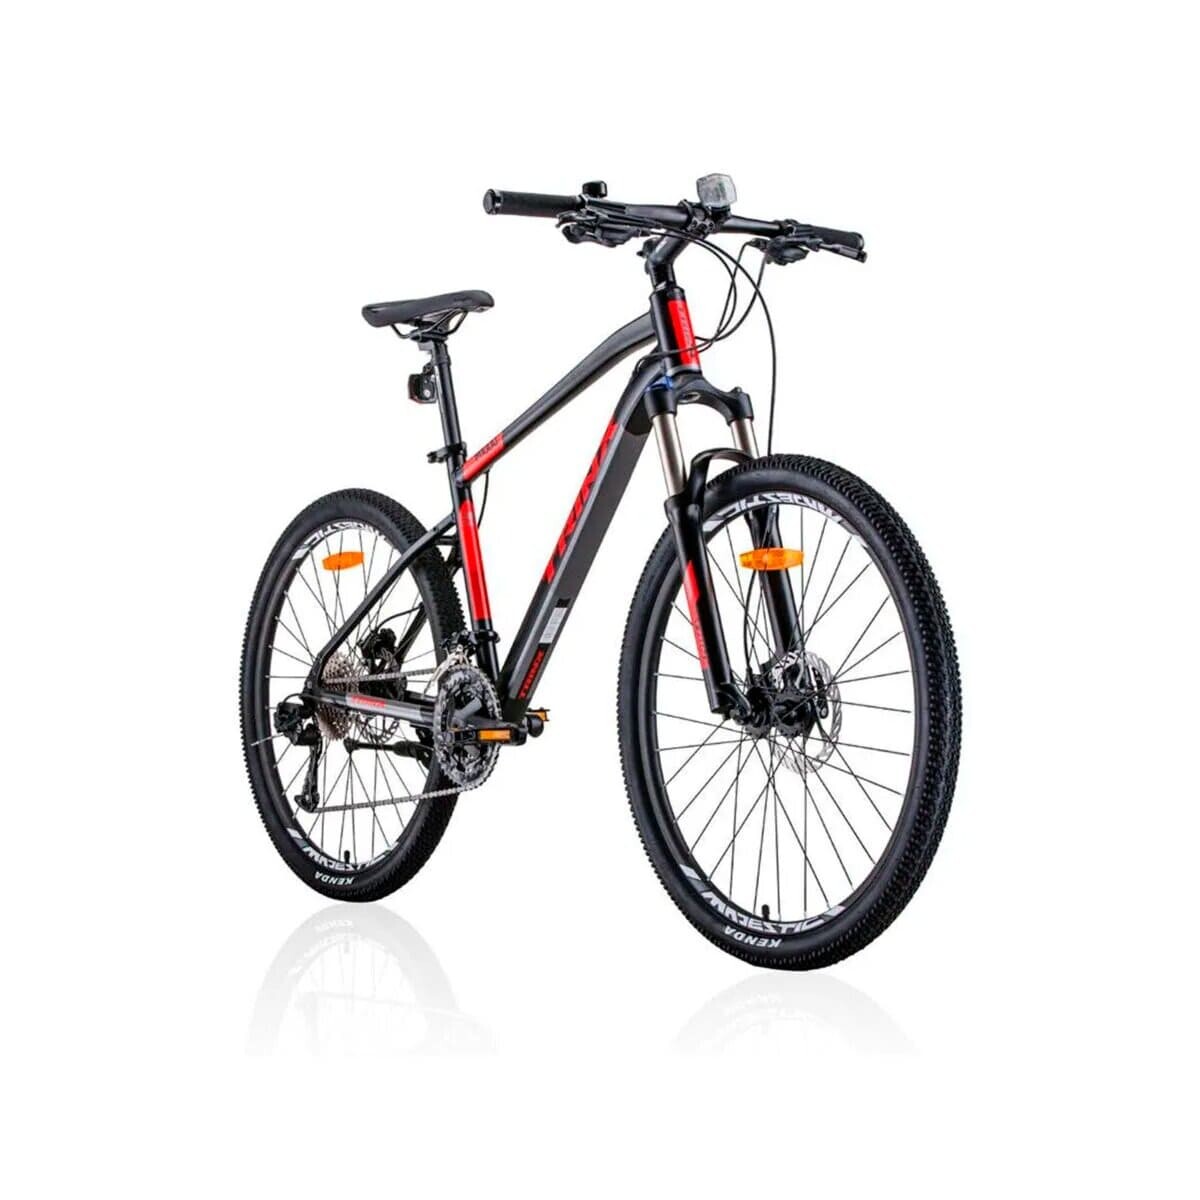 BICICLETA MONTAÑA ALUMINIO TRINX M1000 PRO FRENO HIDRAULICO - Bicicleta Montaña Aluminio Trinx M1000 Pro Freno Hidraulico 